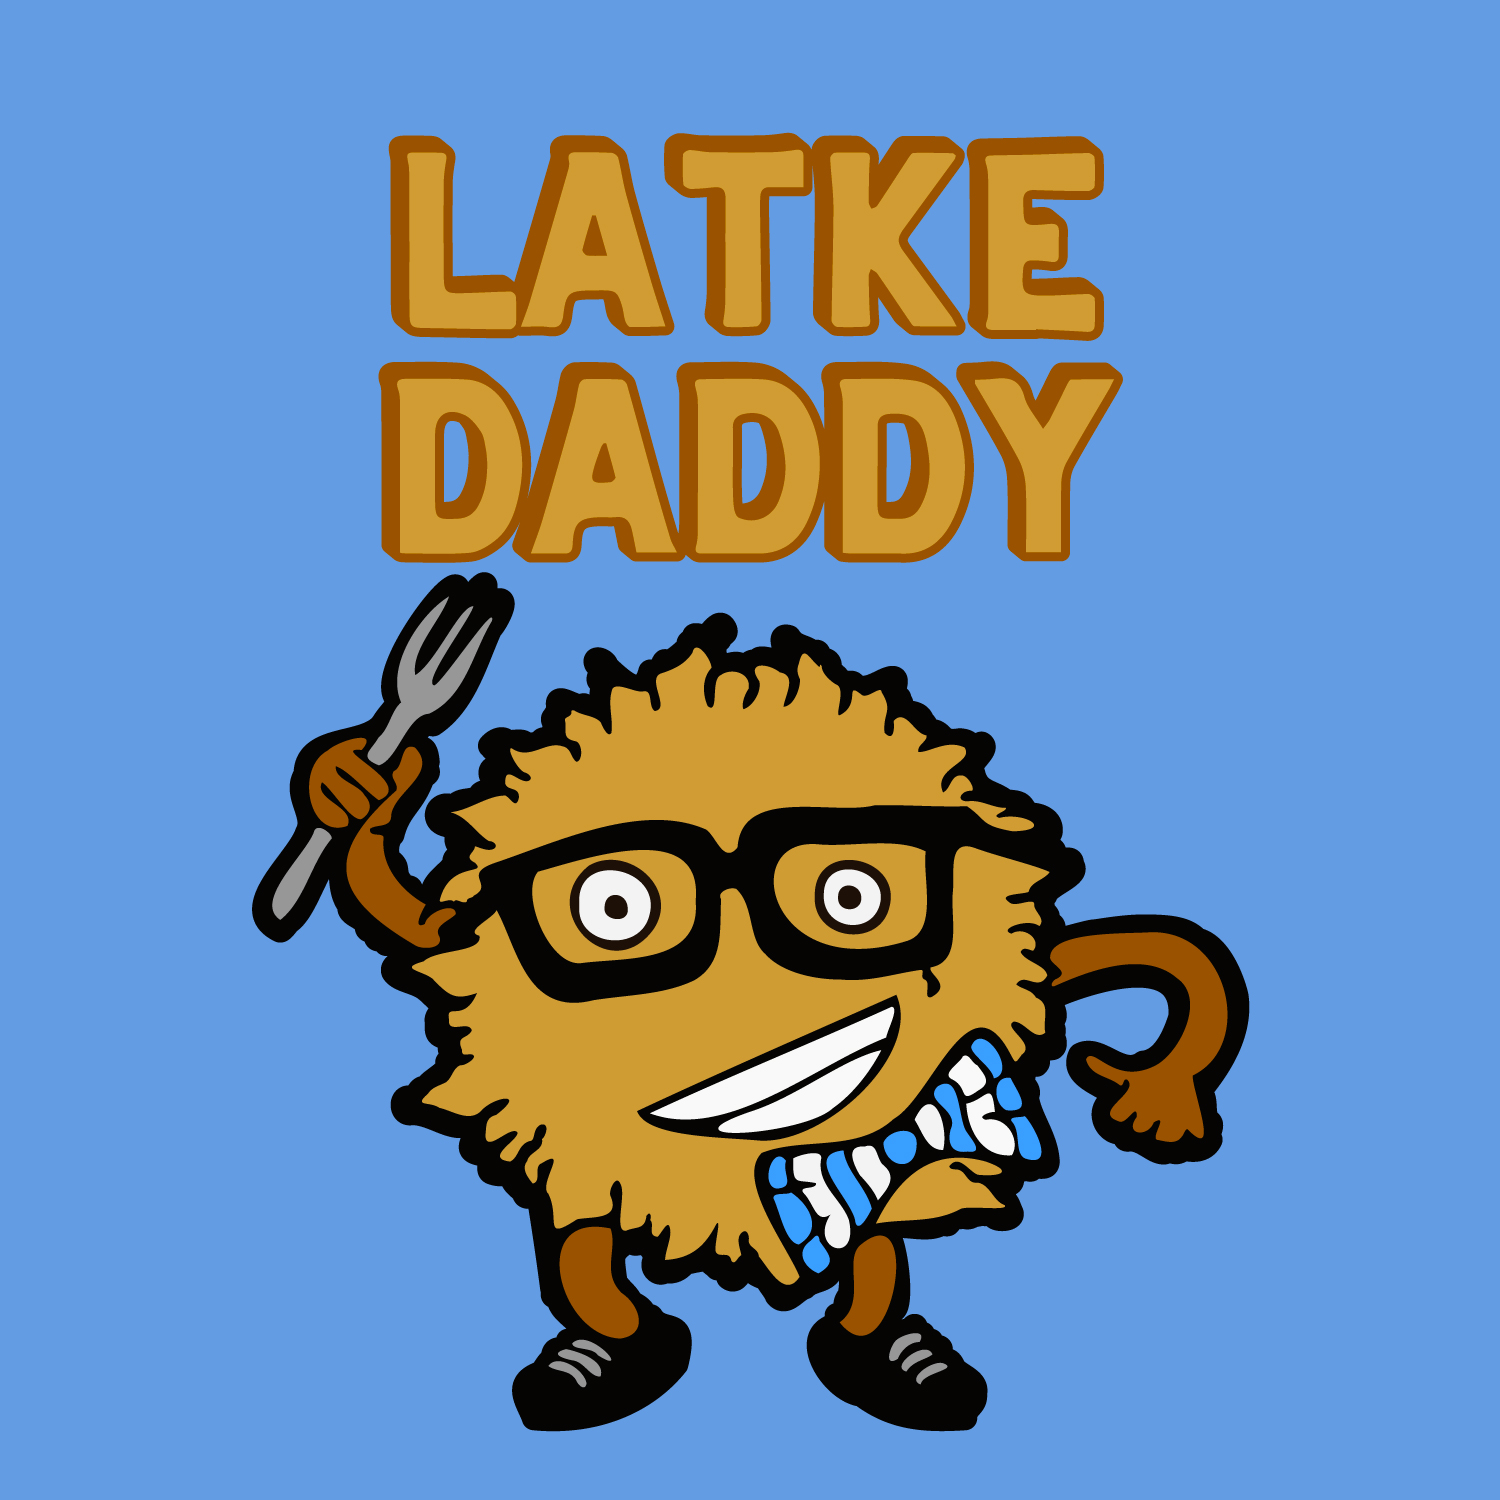 Latke daddy logo